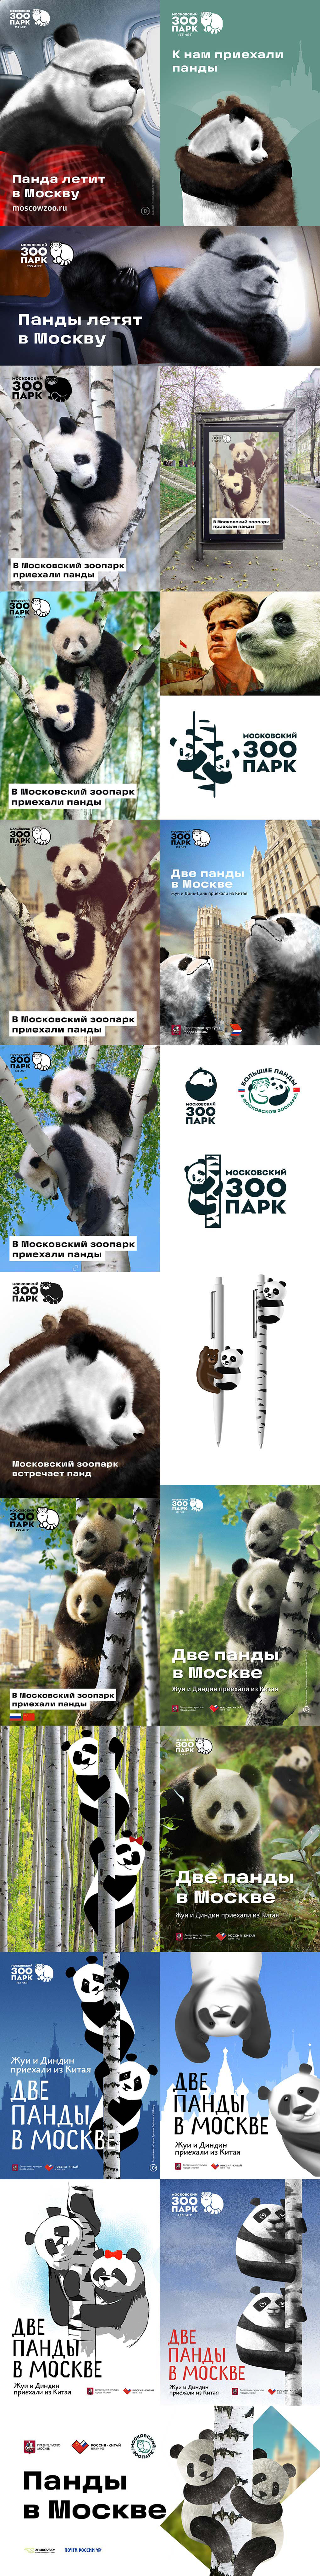 moscow zoo pandas process 01